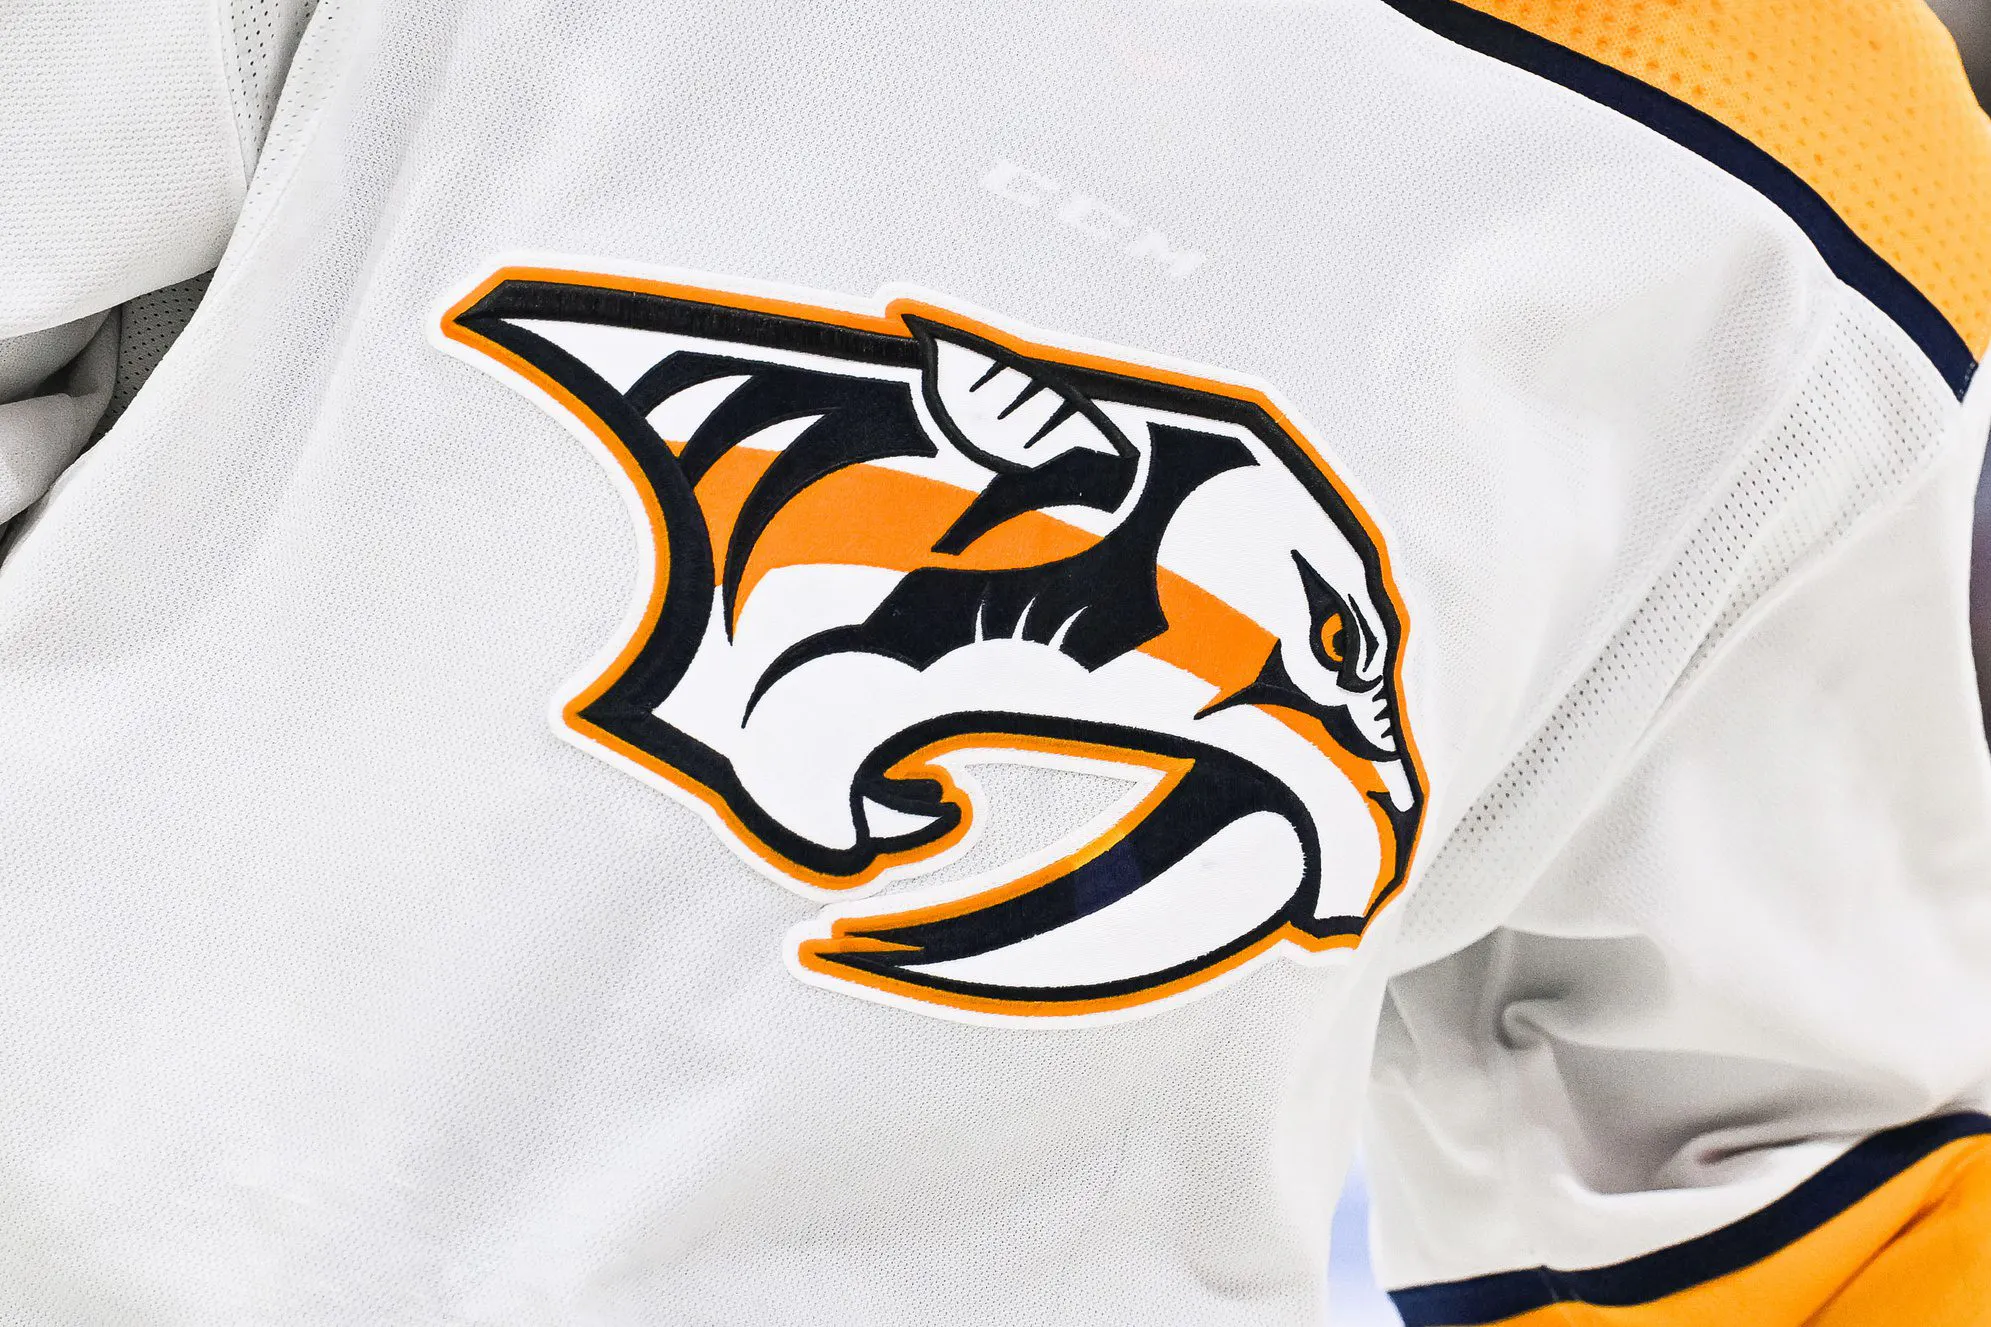 Report: Nashville Predators sale closing at $880 million, short of NHL record